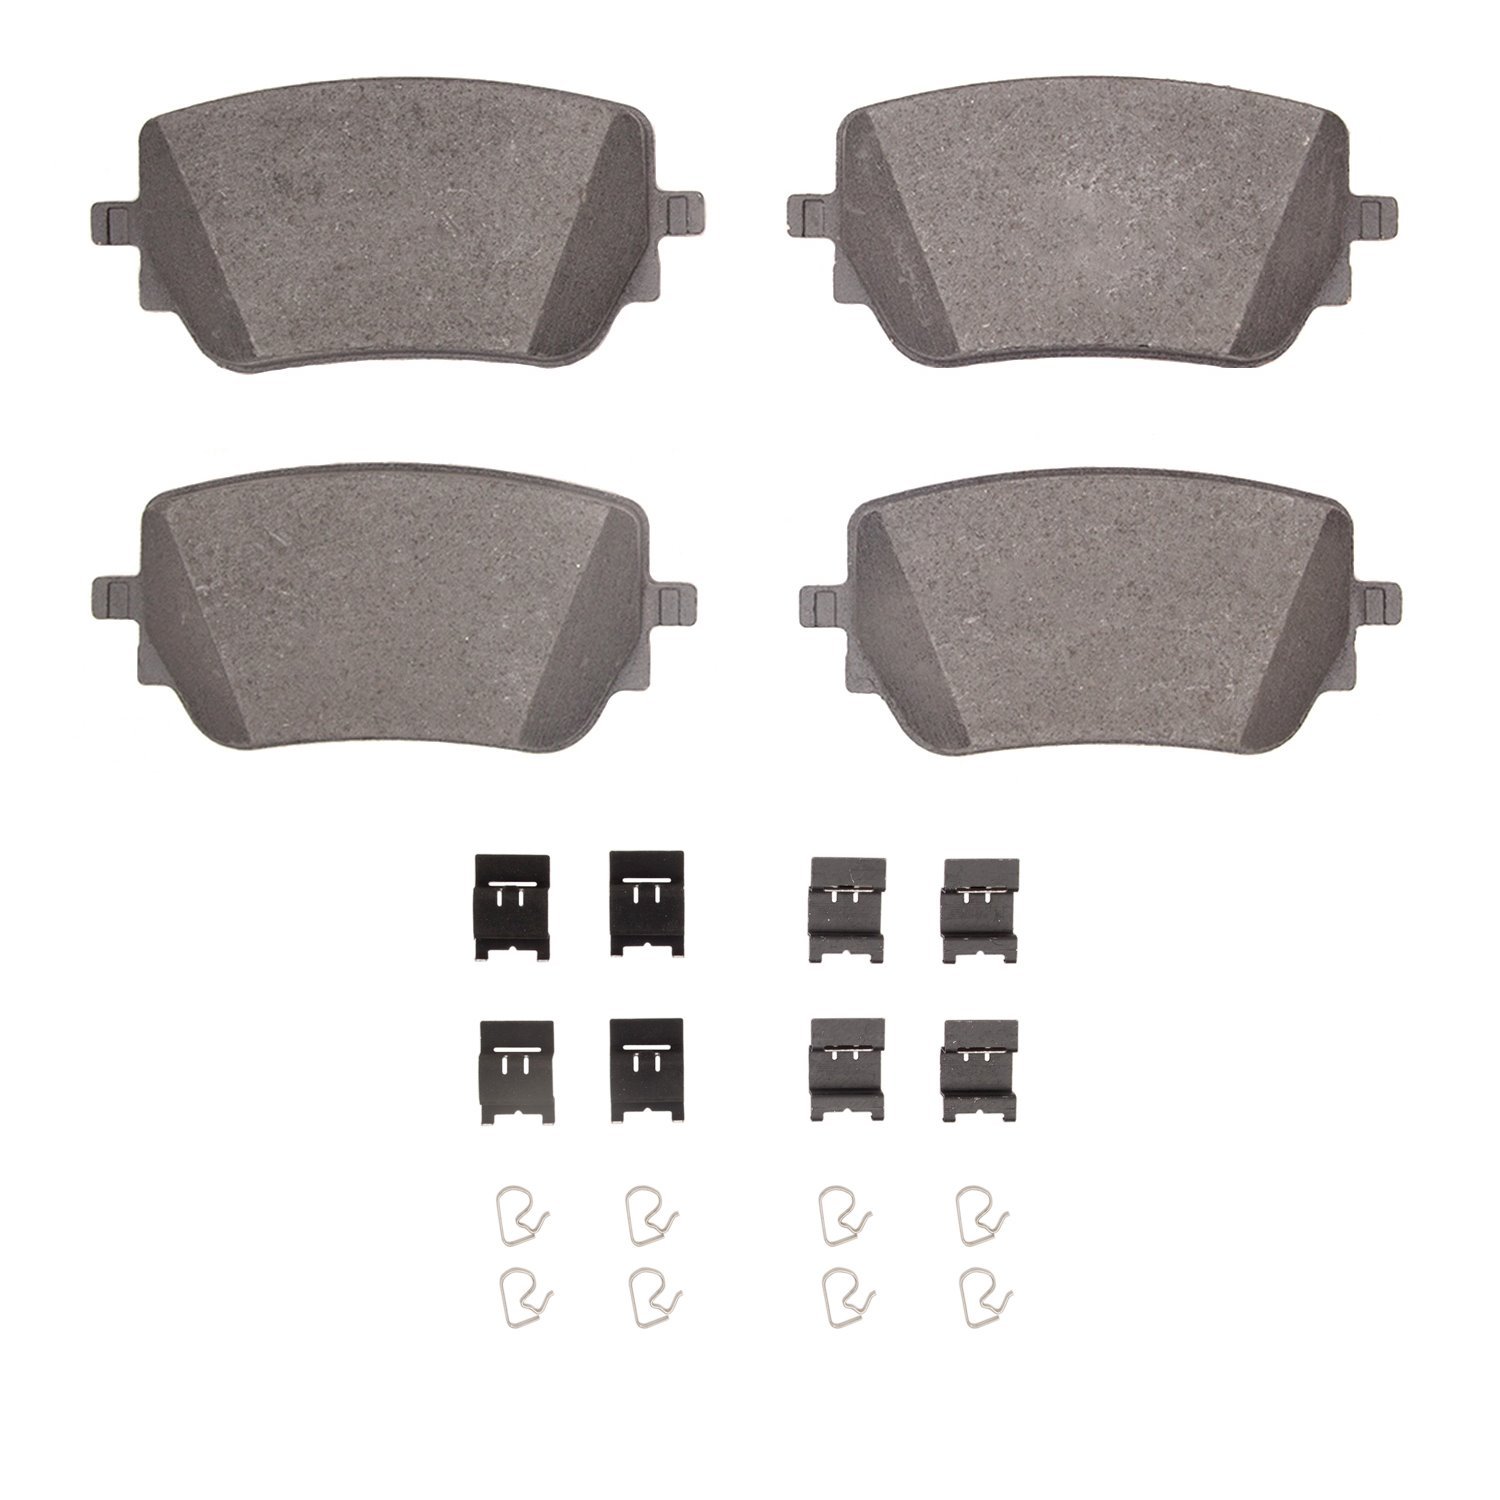 1310-2271-01 3000-Series Ceramic Brake Pads & Hardware Kit, Fits Select Mercedes-Benz, Position: Rear